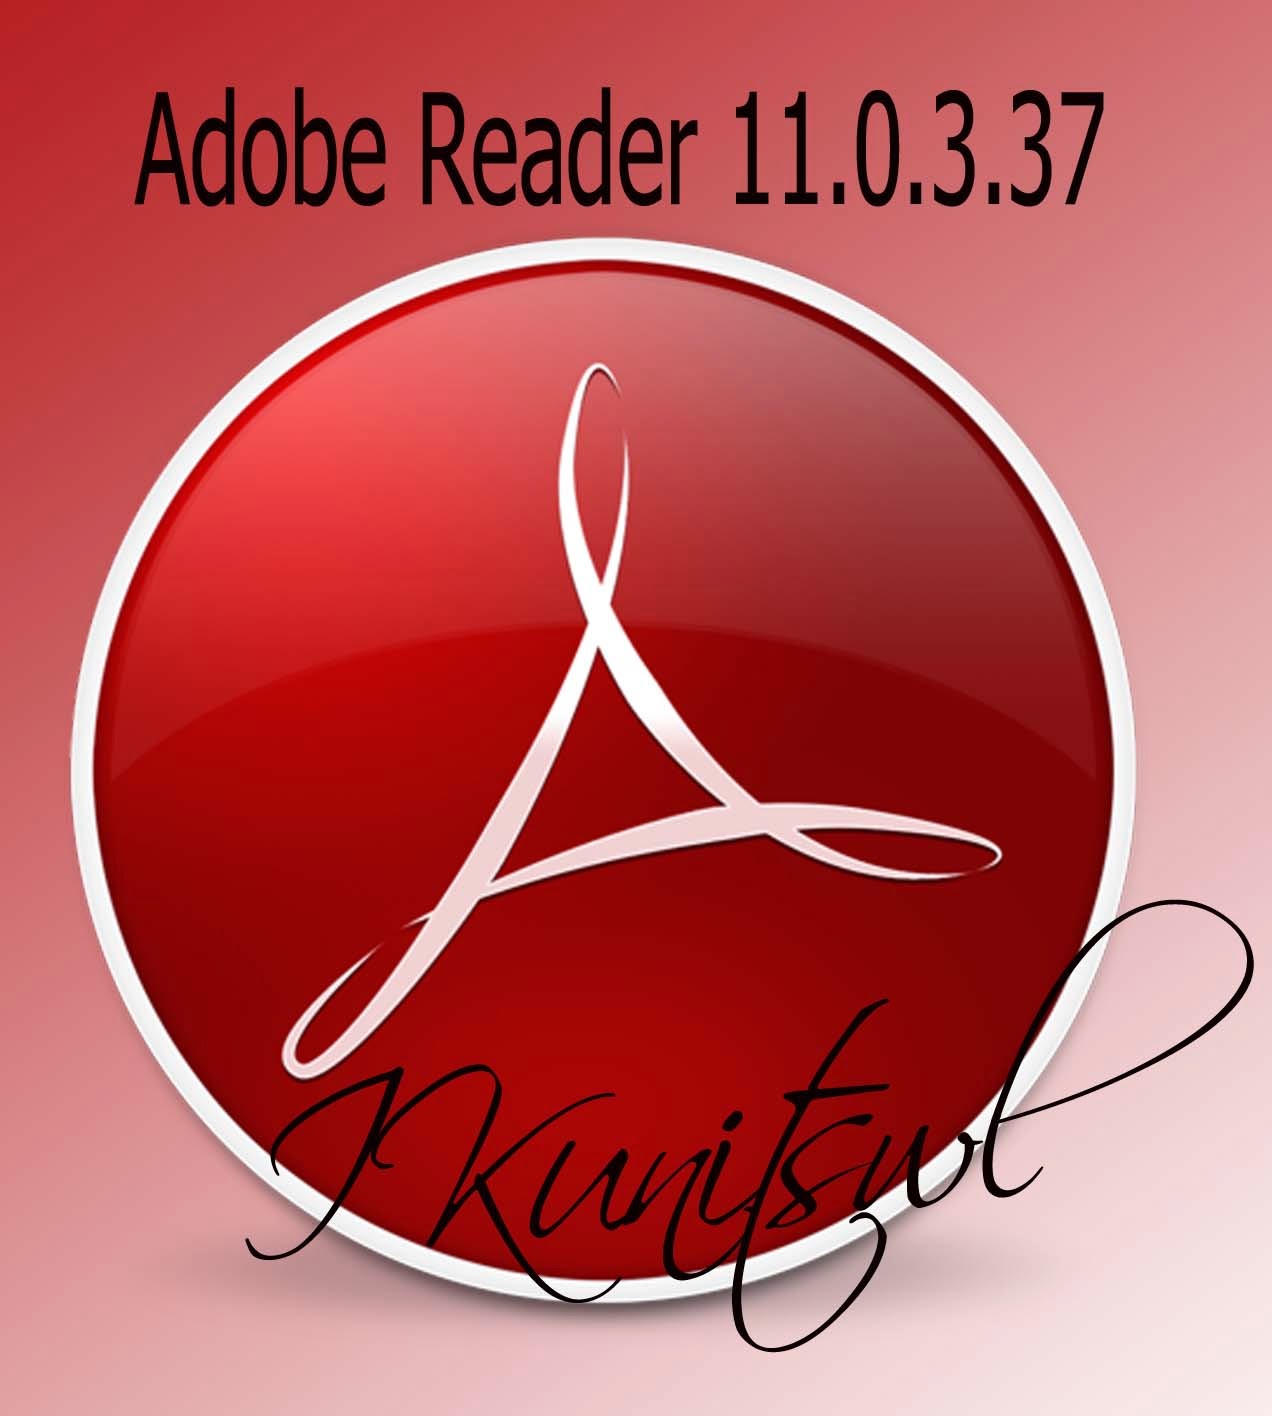 adobe reader software free download for windows 7 32bit